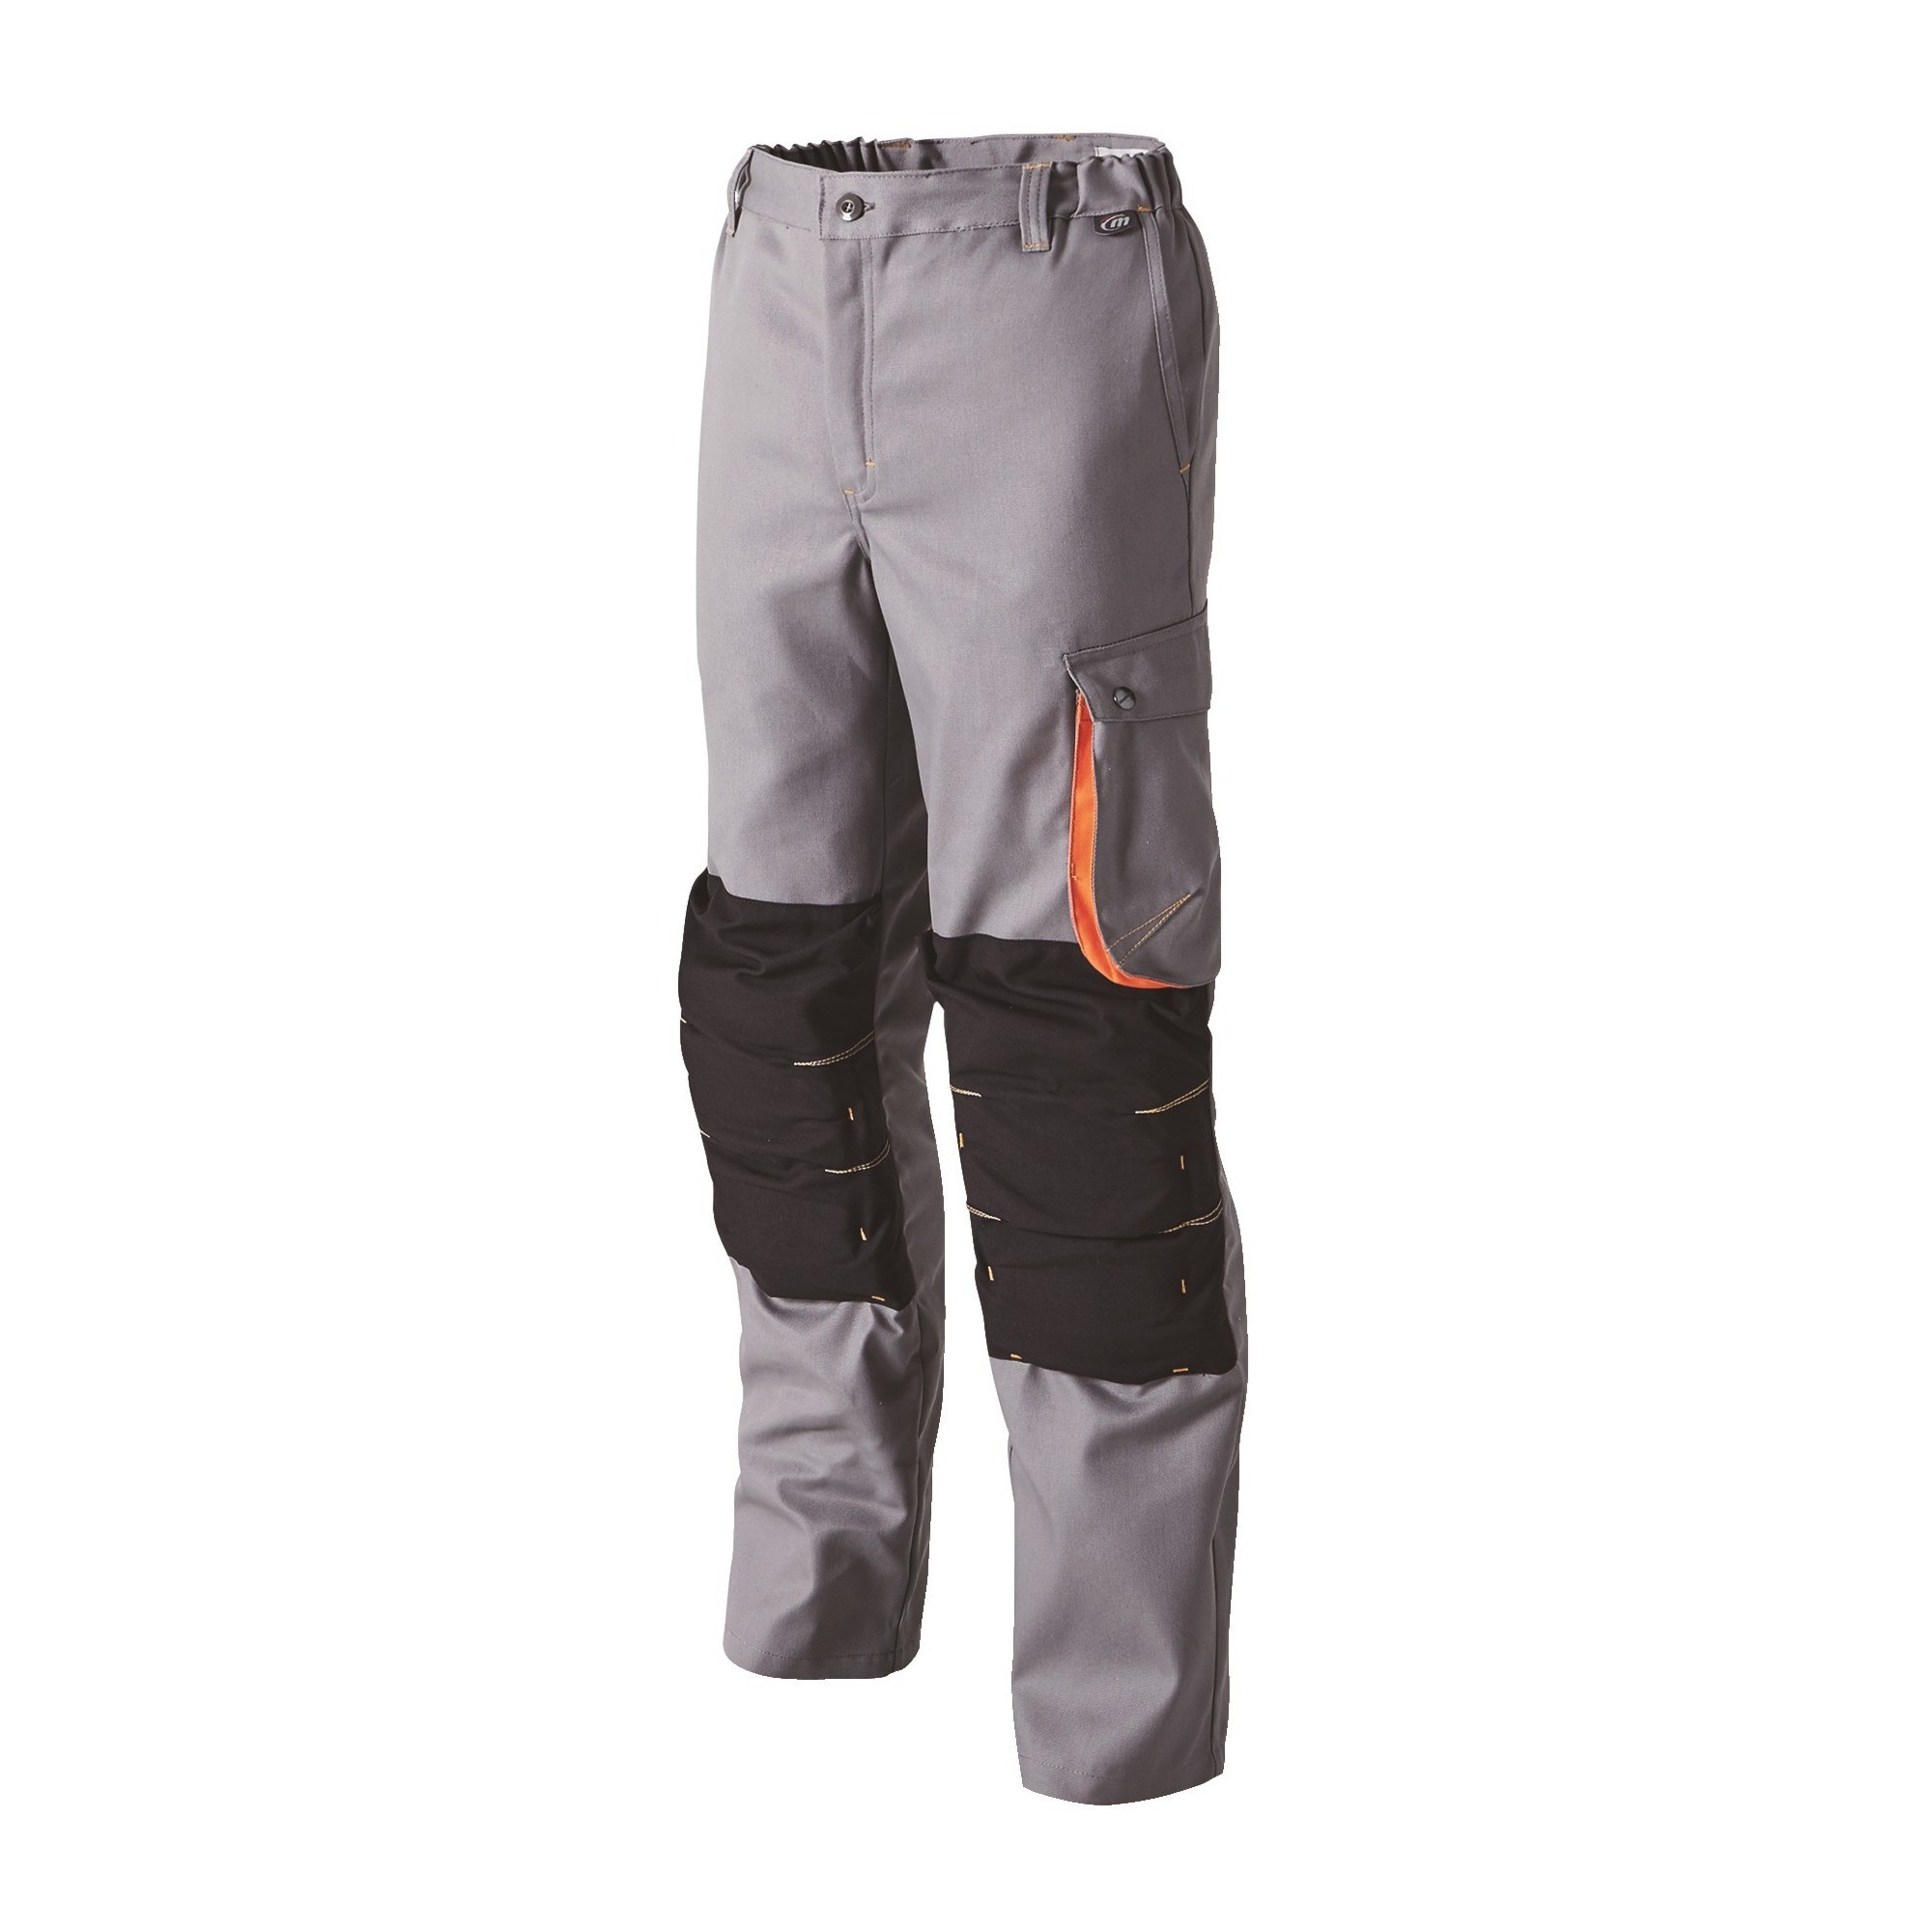 Pantalon G-Rok avec poches genouillères - MOLINEL